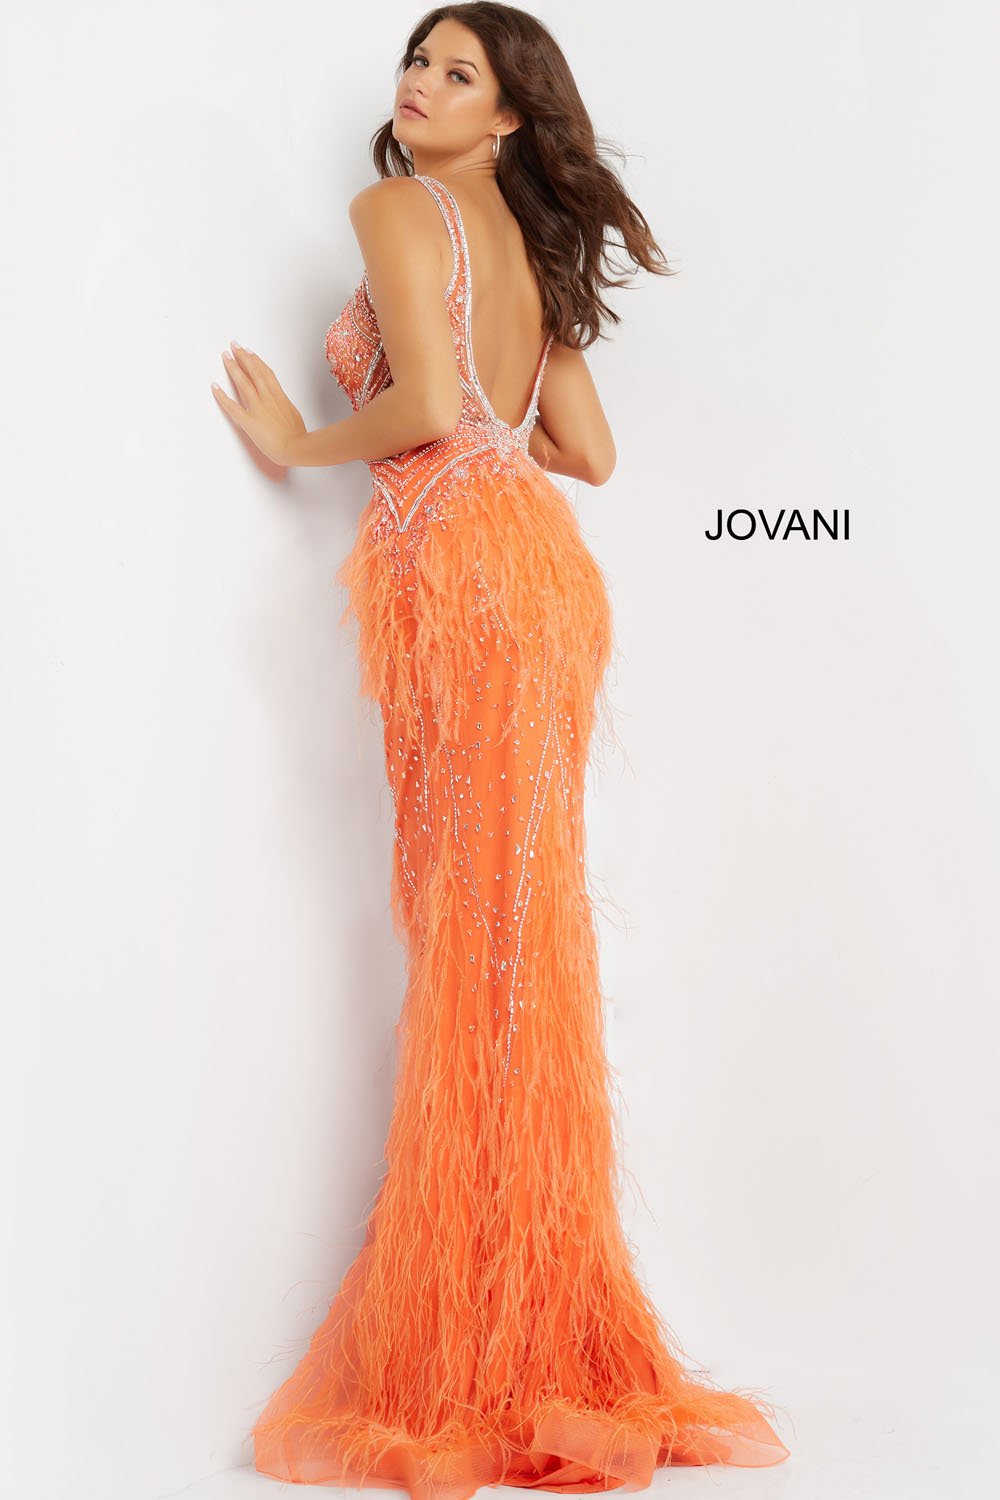 Jovani 03023 orange prom dresses images.